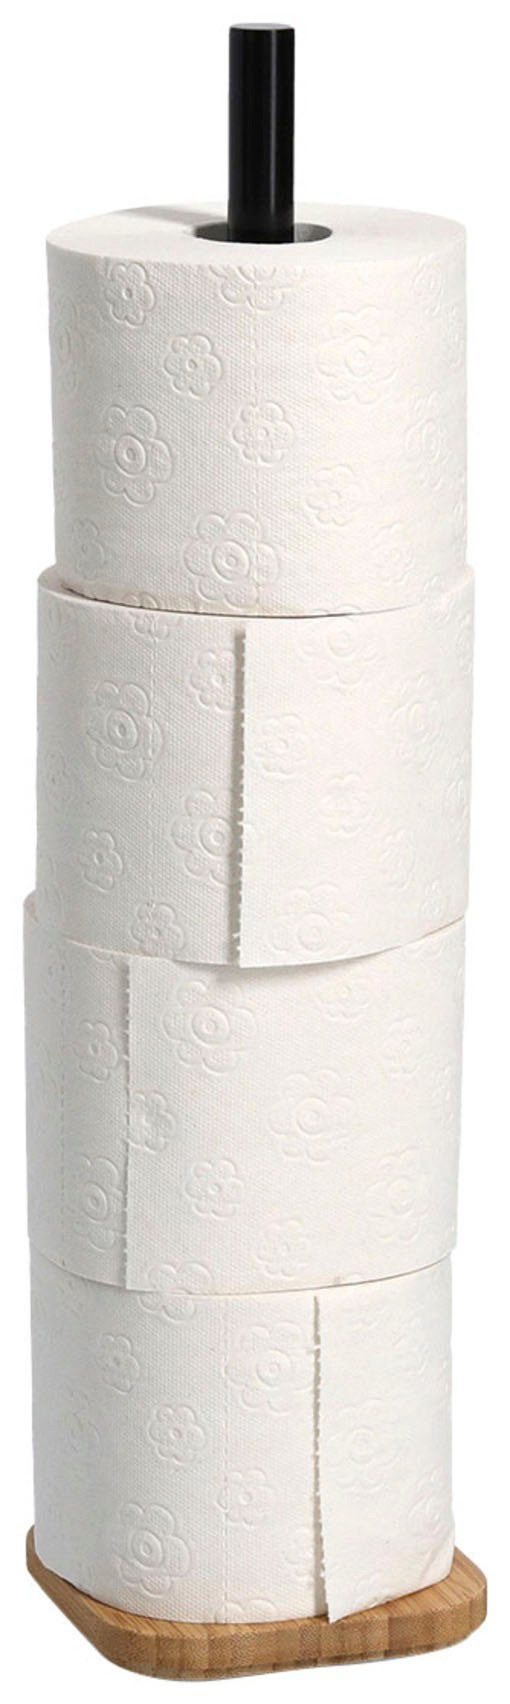 Zeller Present Toiletten-Ersatzrollenhalter, WC-Rollenhalter, Bambus | Toilettenpapierhalter